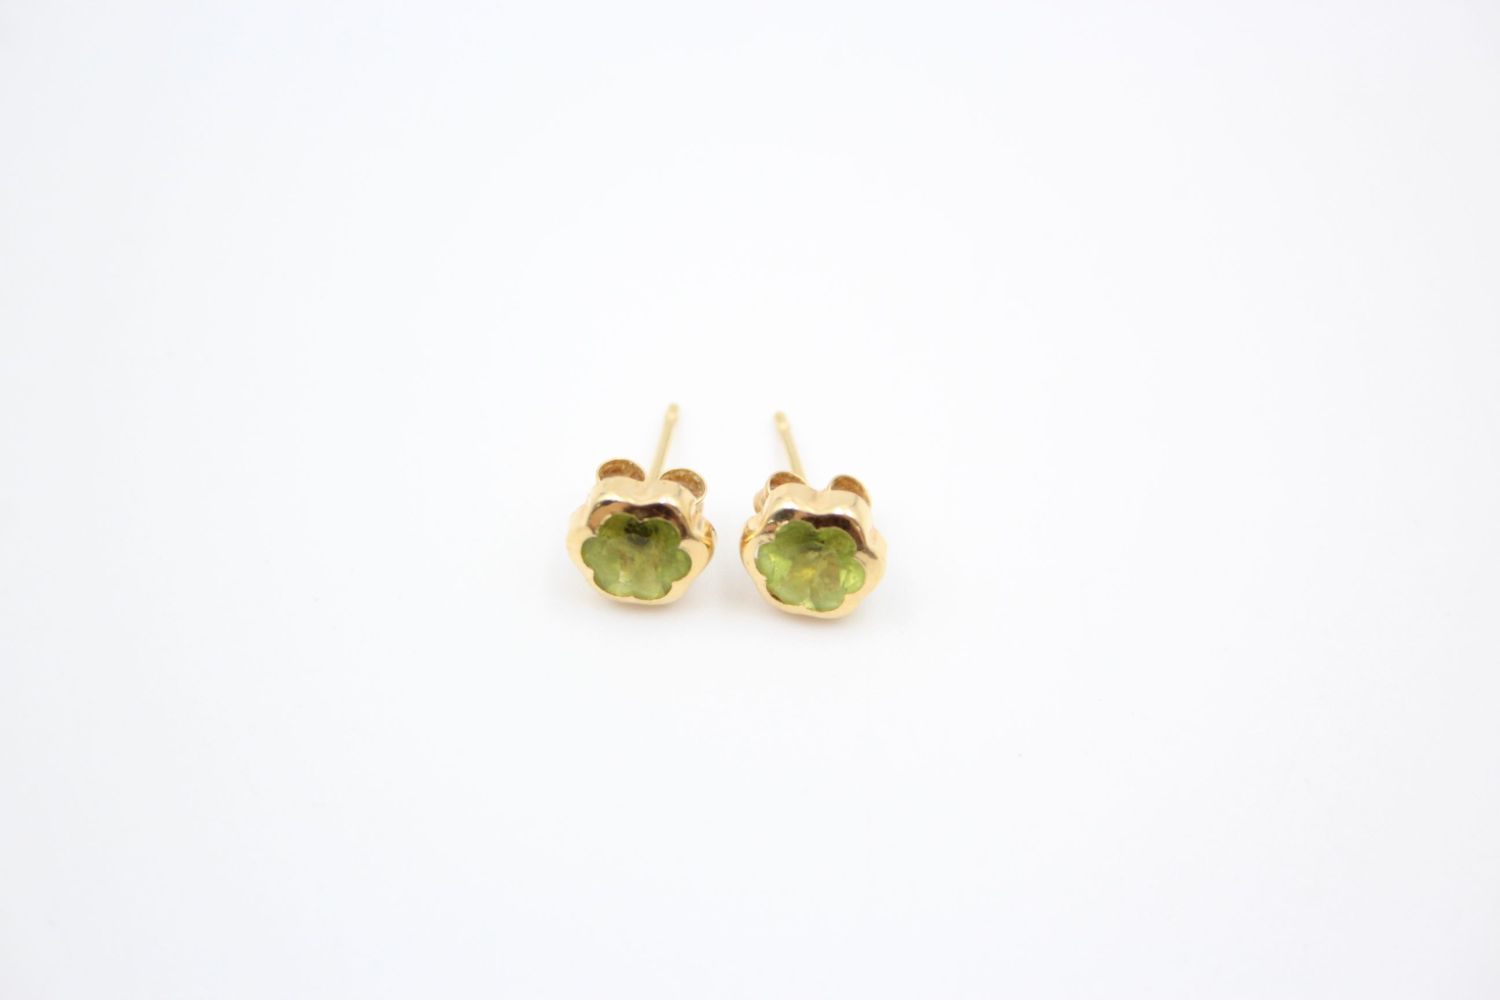 2 x 9ct gold gemstone stud earrings 1.6 grams gross - Image 3 of 10